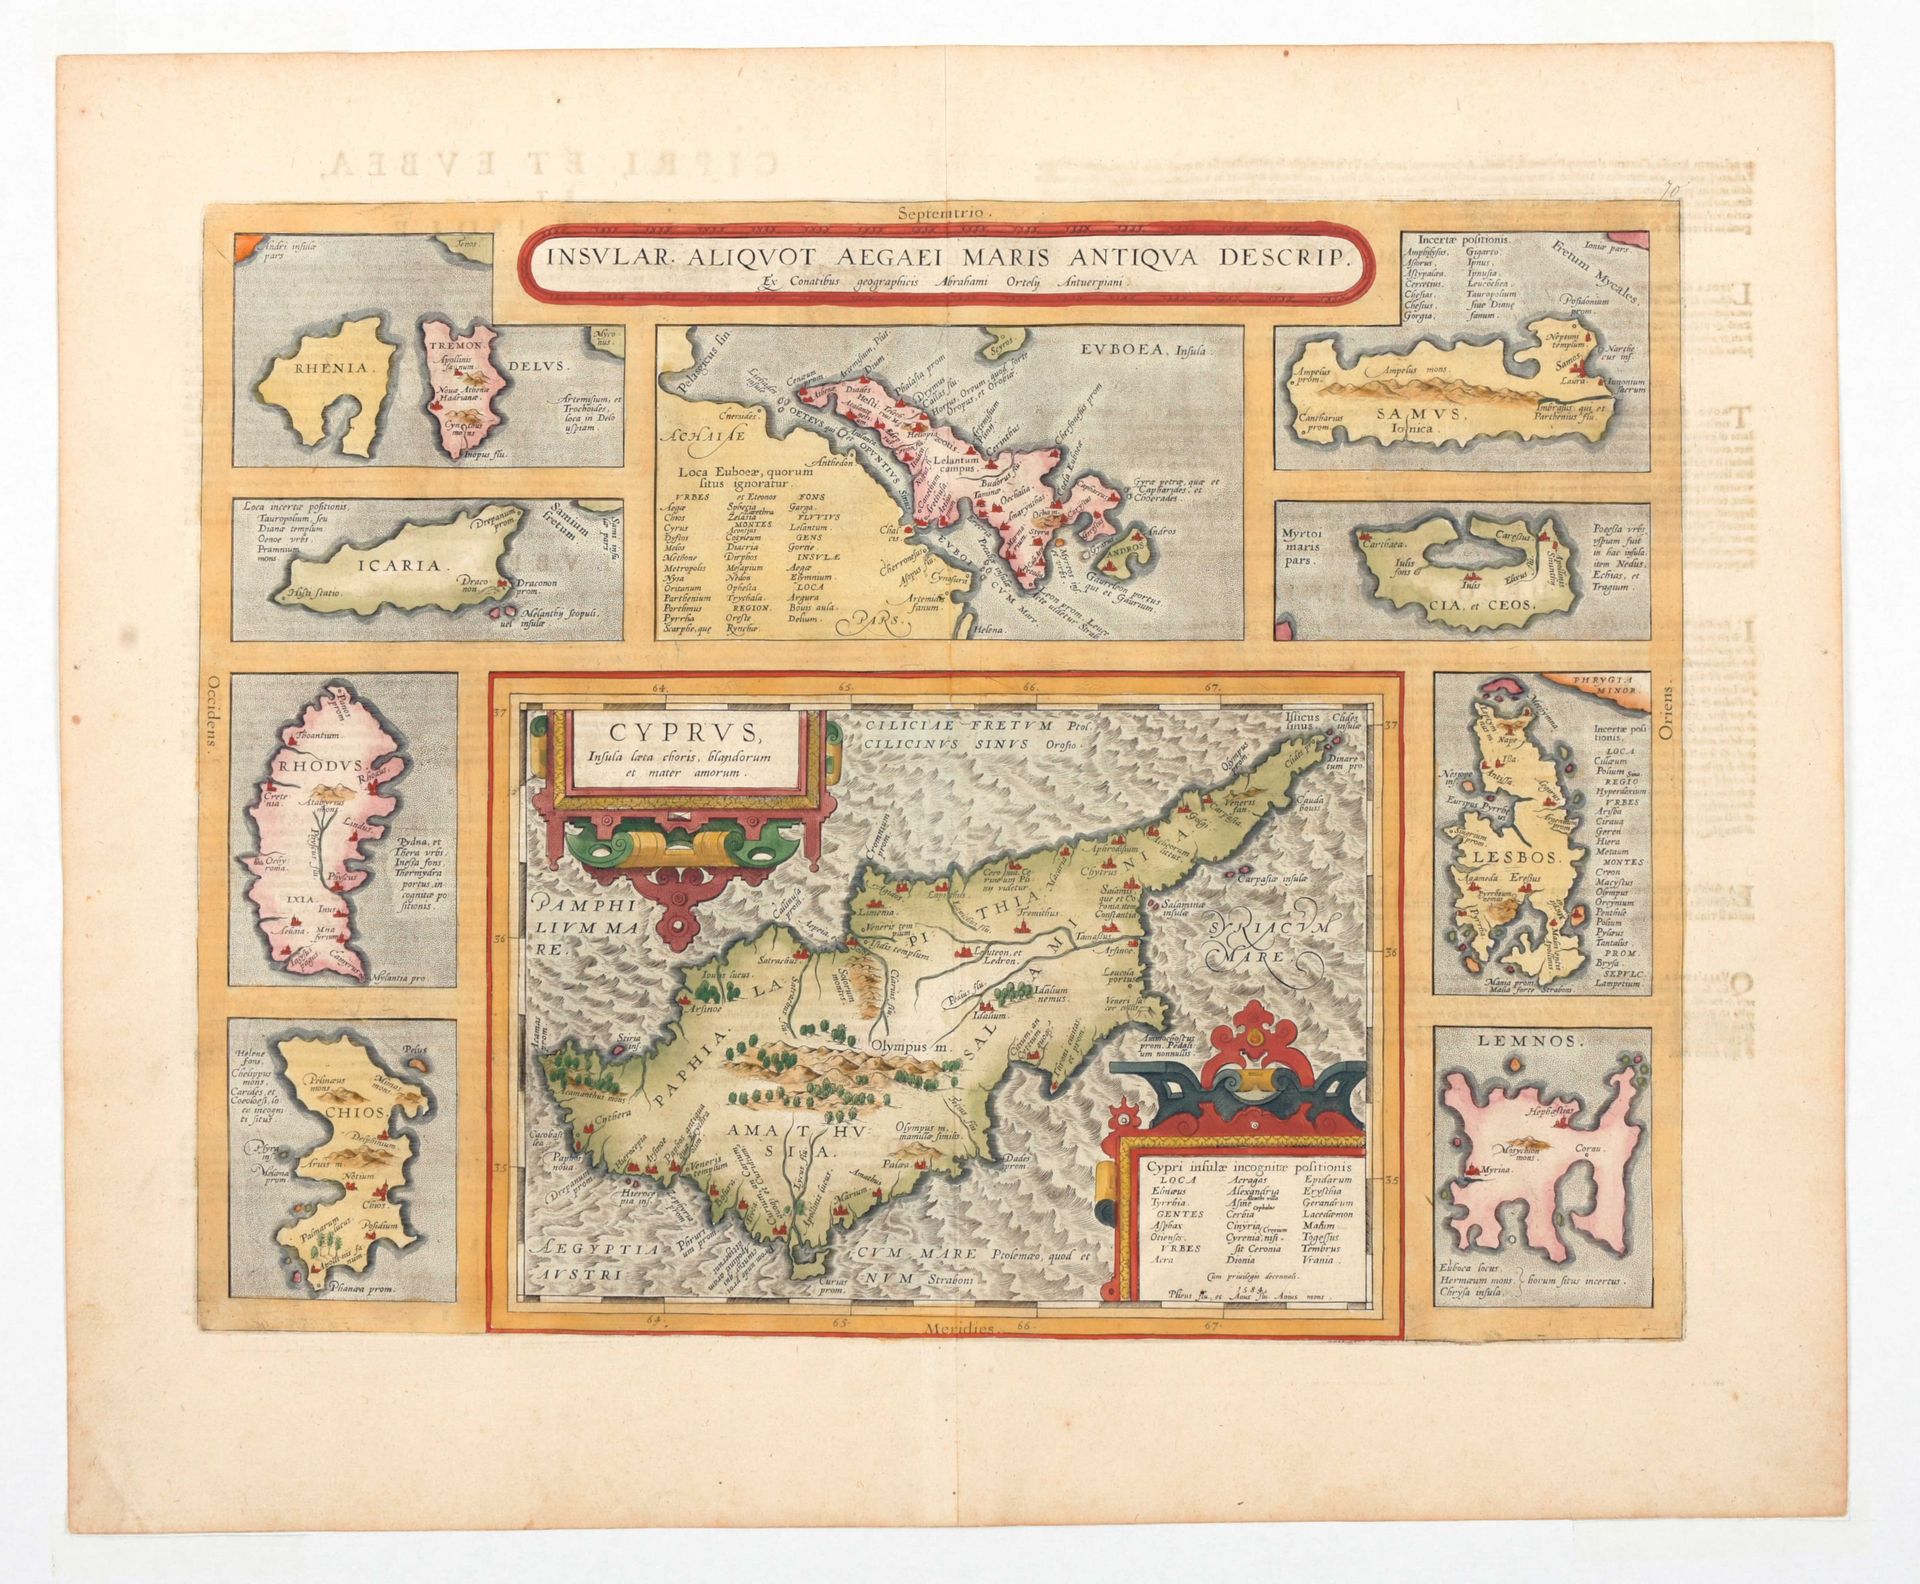 [CYPRUS] Insular aliquot aegei maris antiqua descript

Mappa originale a mano (3&hellip;